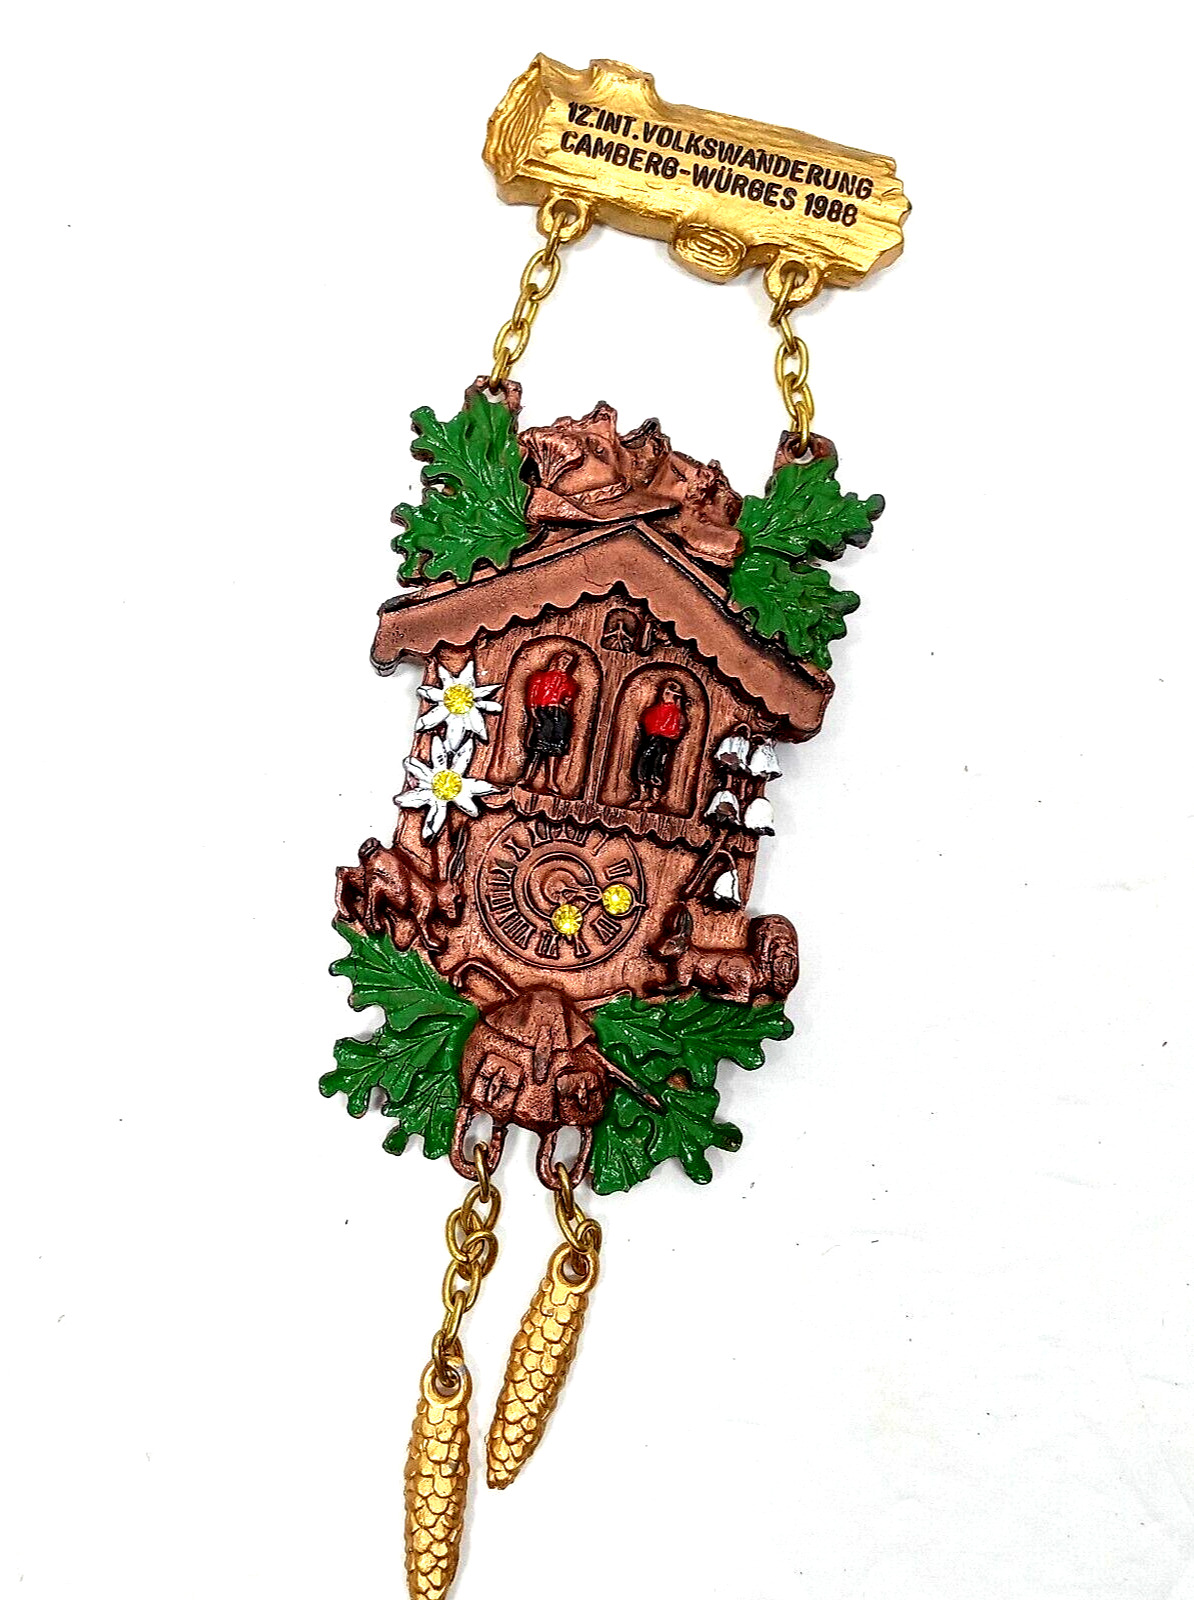 1988 German Wandertag Metal Medallion Pinback Cuckoo Clock Pin